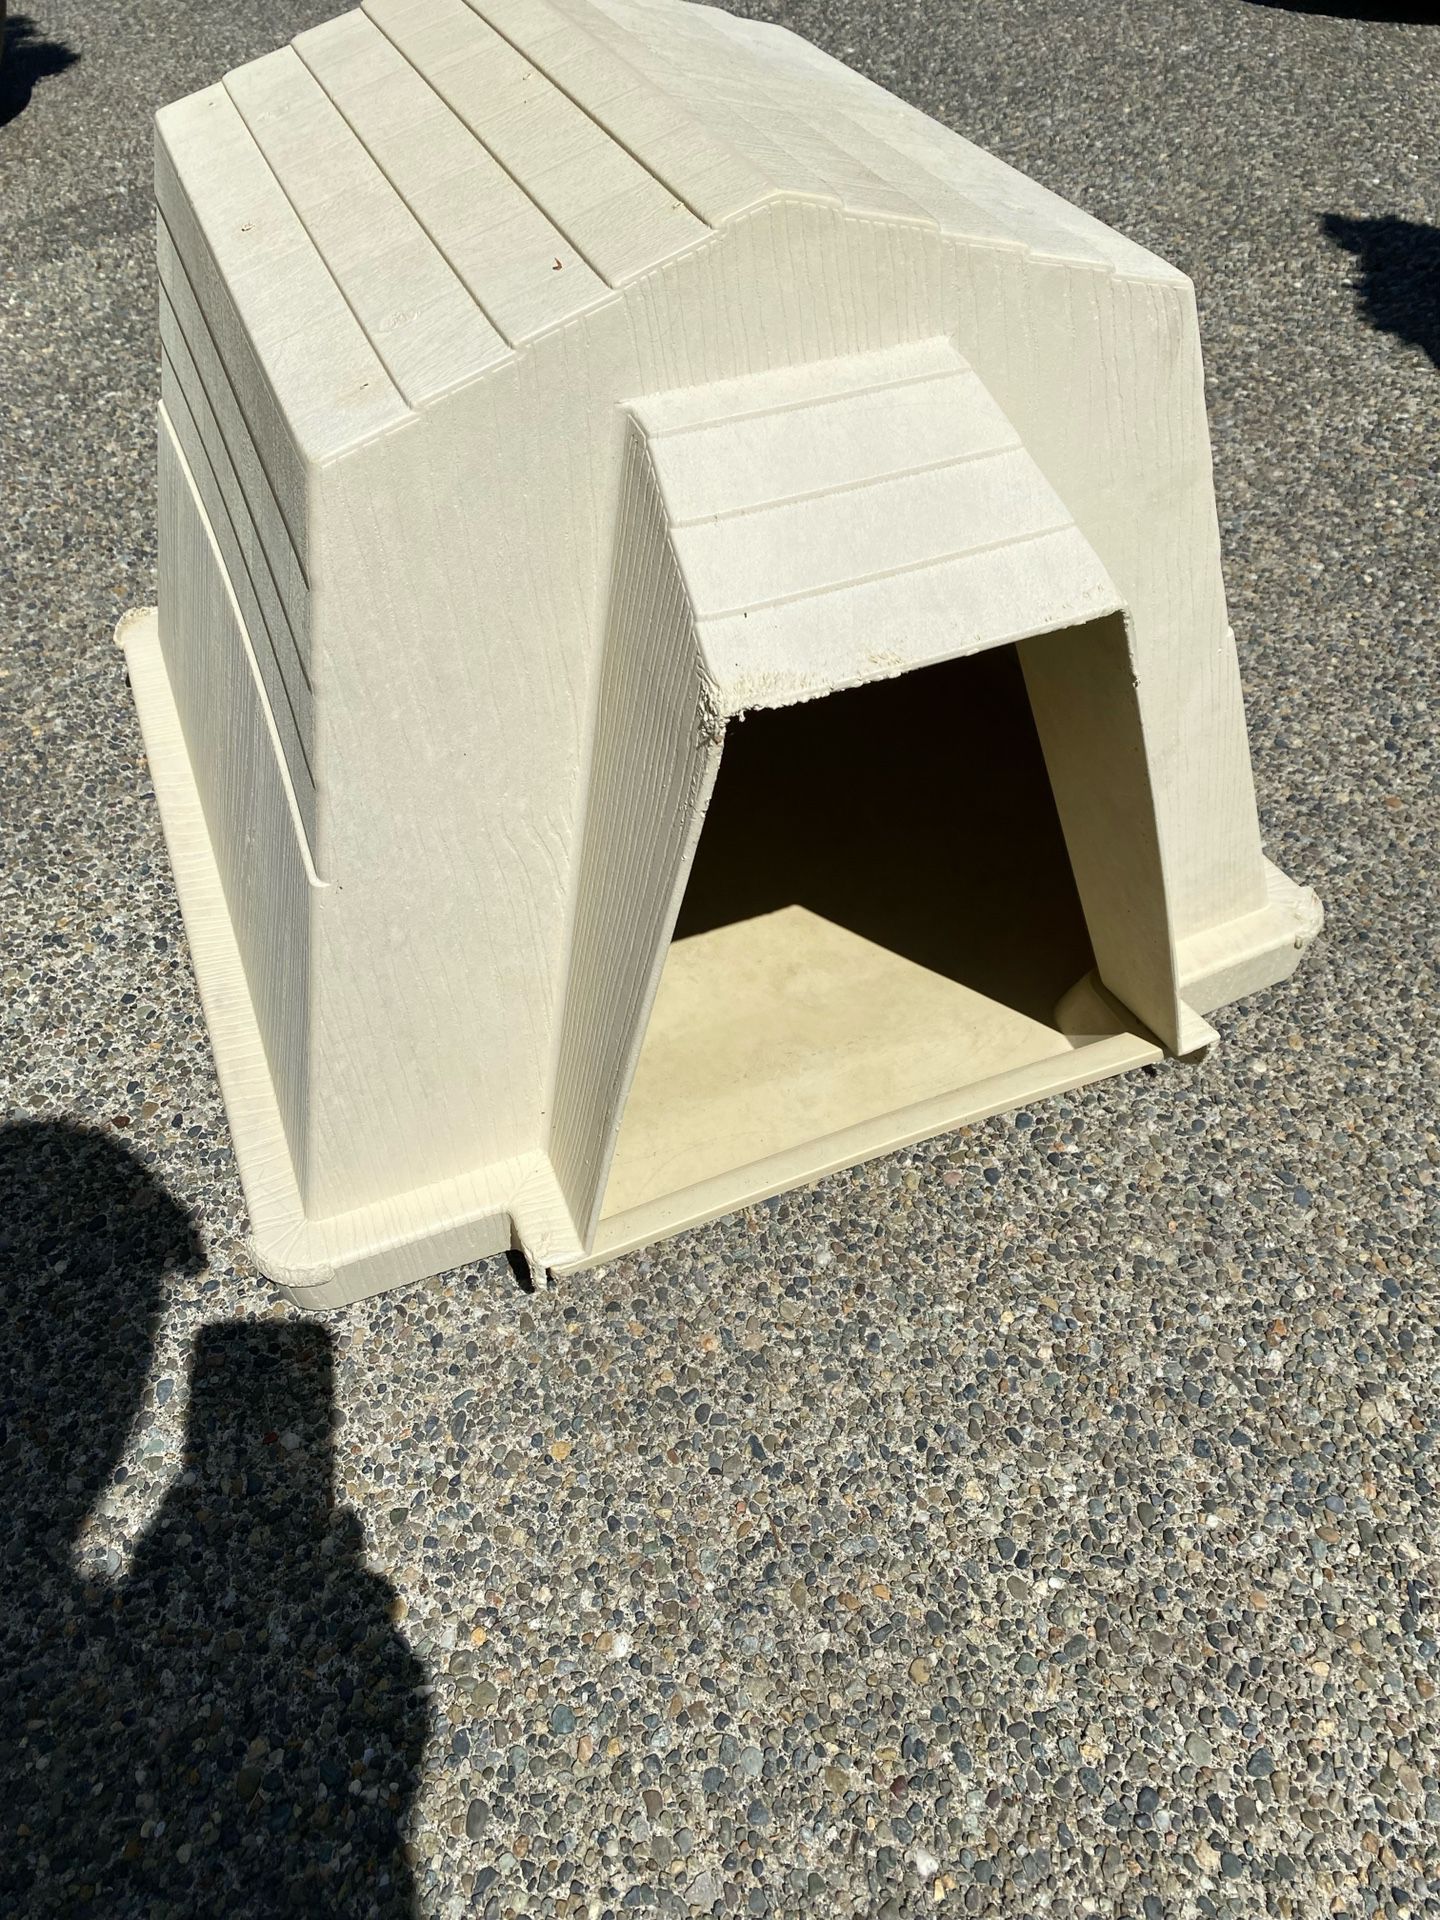 Plastic 1 Piece Dog House